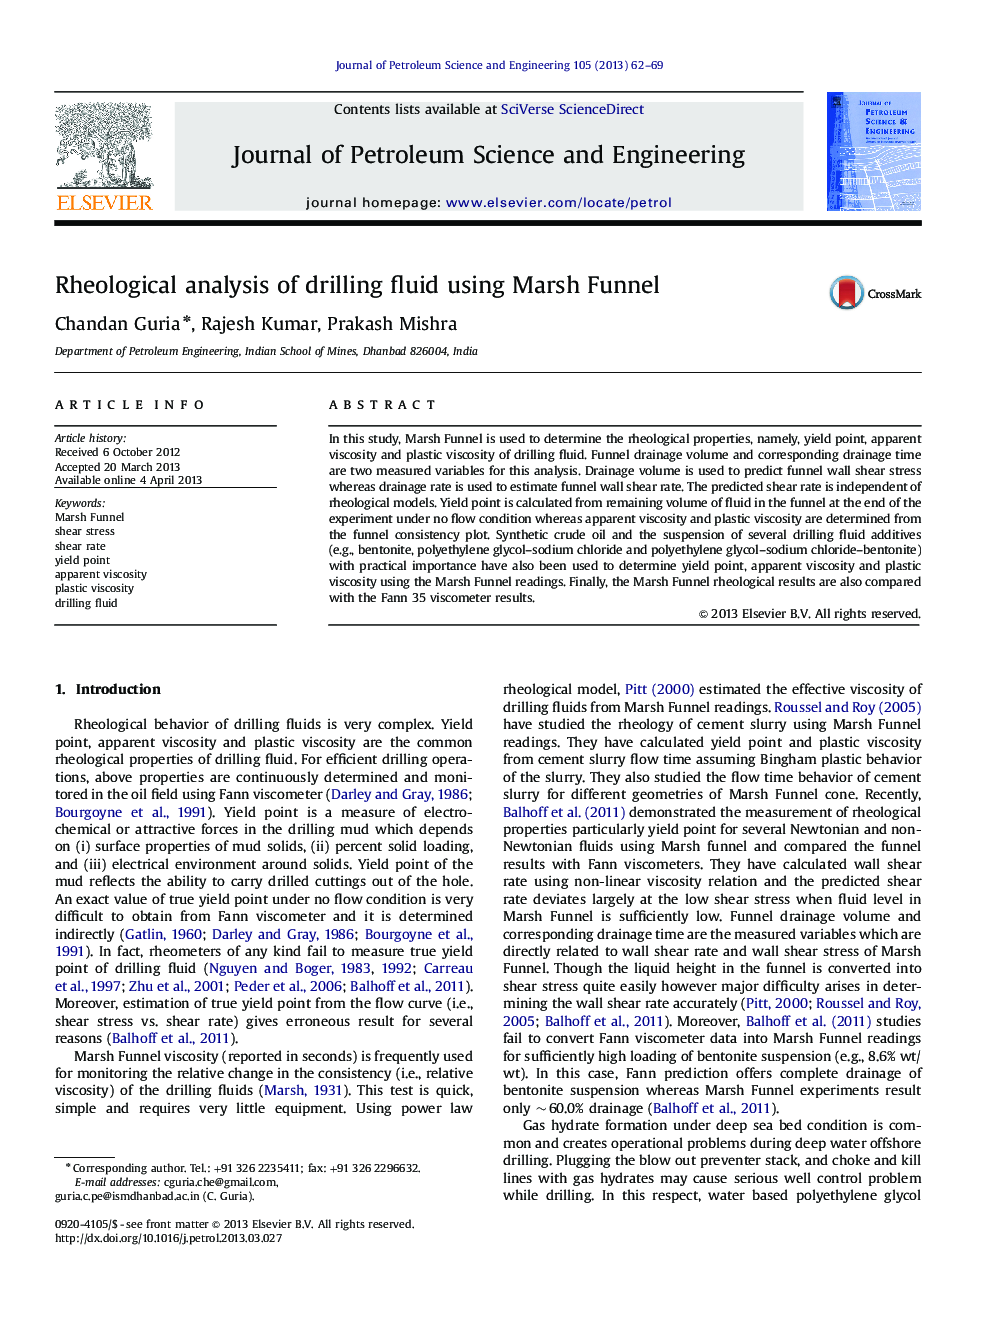 Rheological analysis of drilling fluid using Marsh Funnel